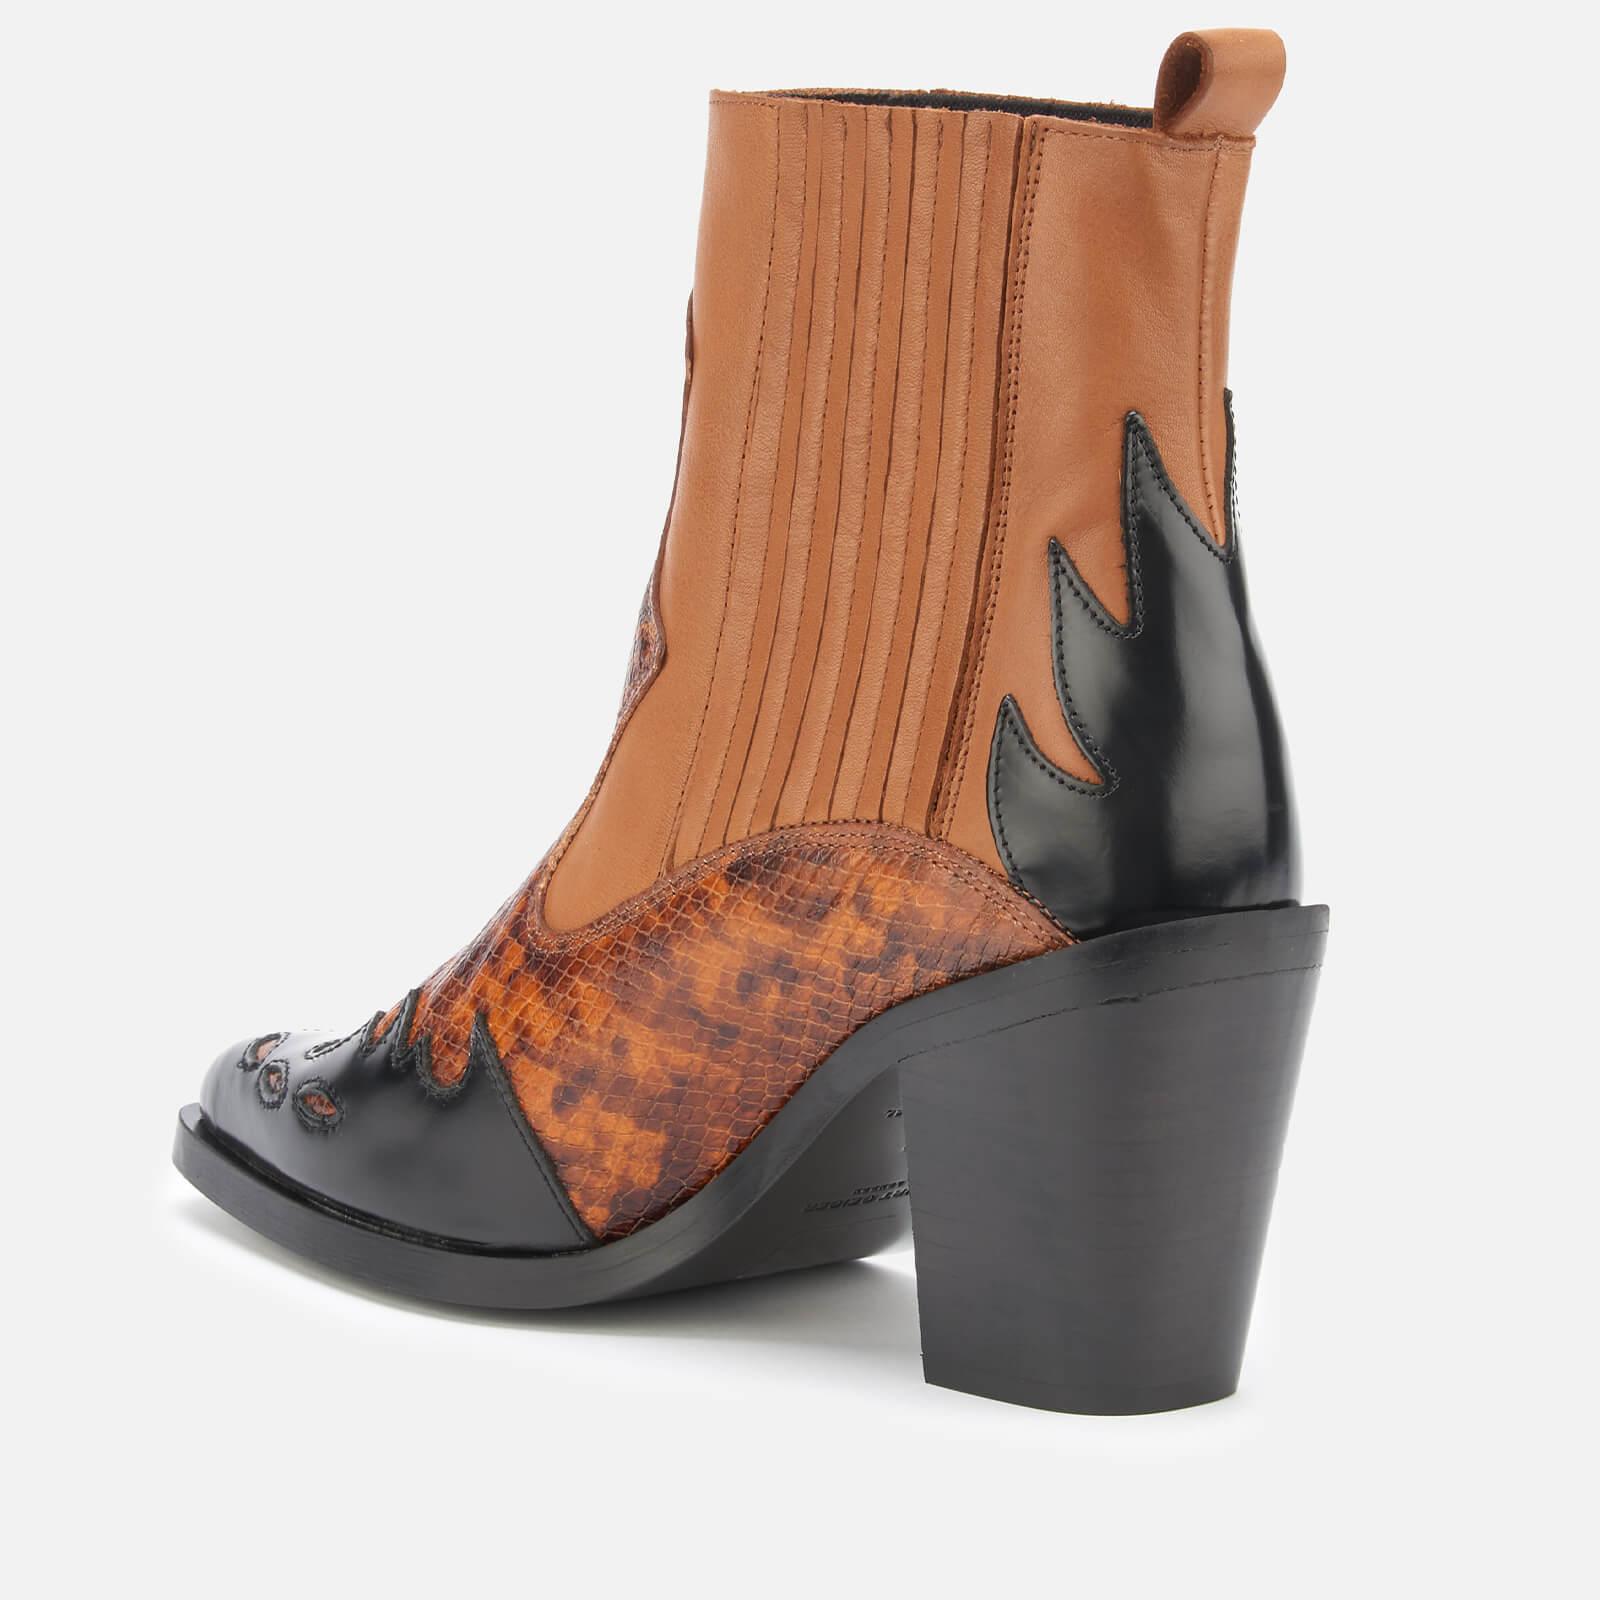 kurt geiger black leather western heeled ankle boots